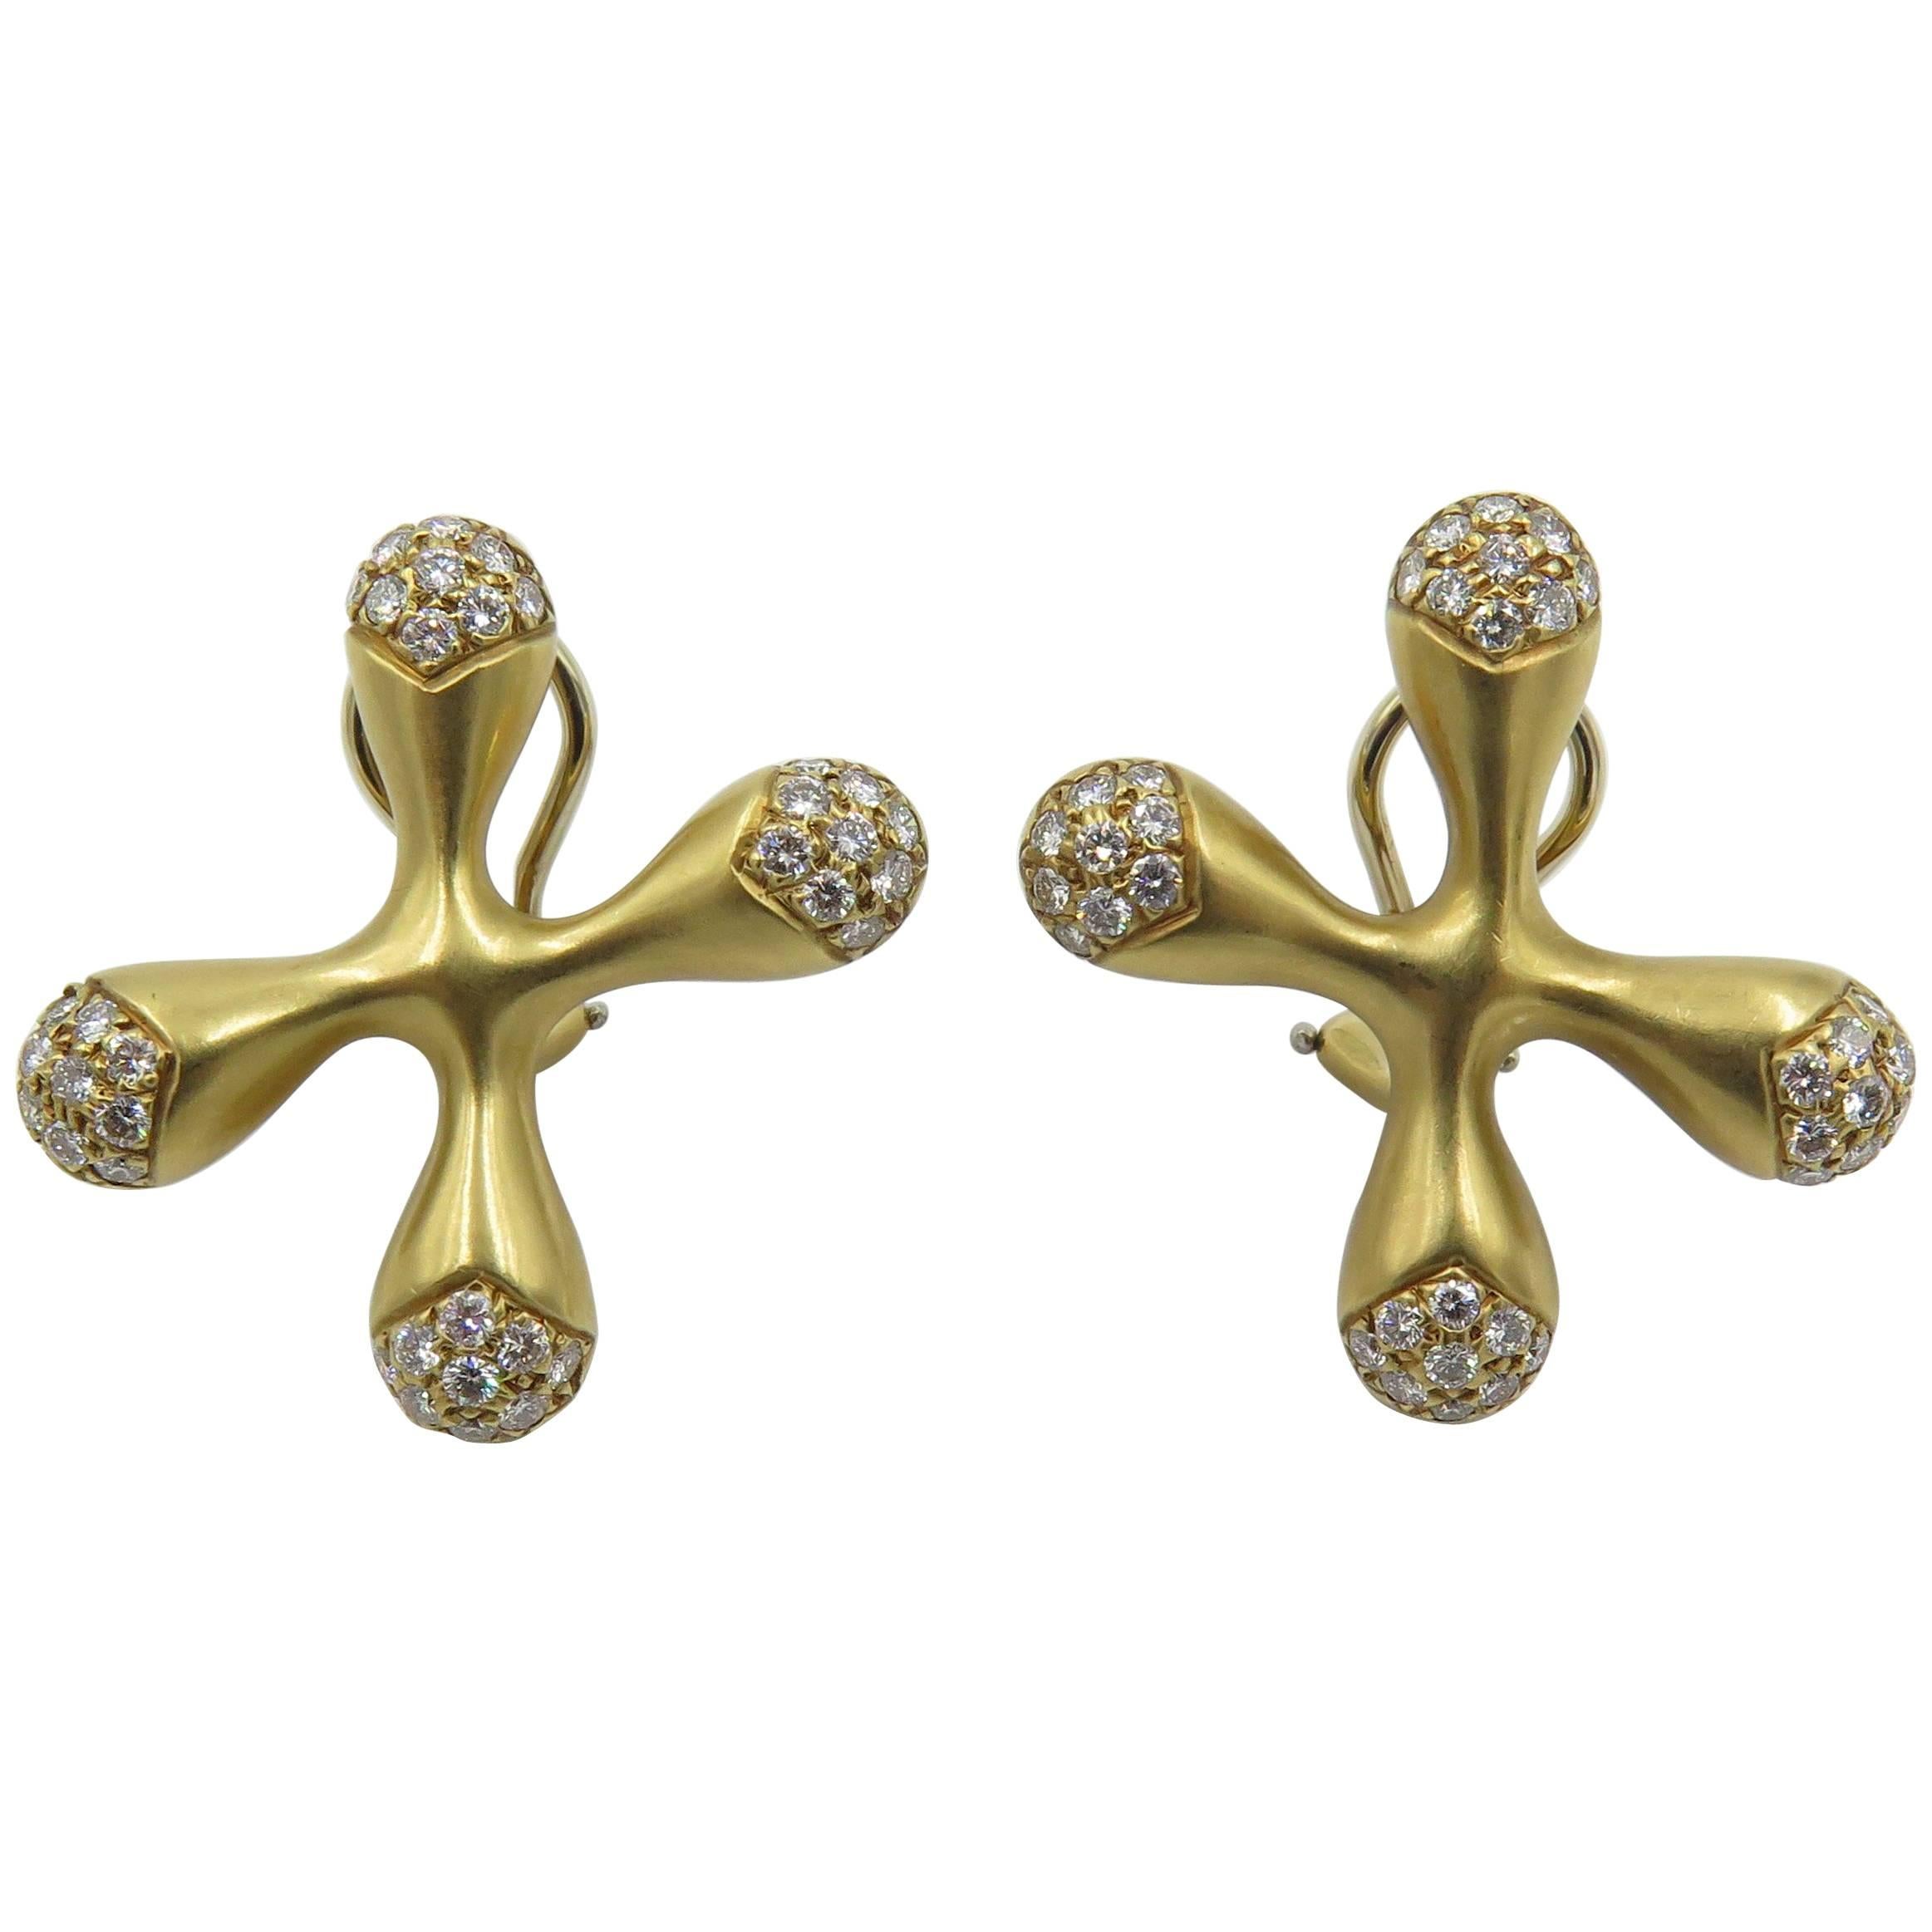 Angela Cummings Gold and Diamond "X" Earrings